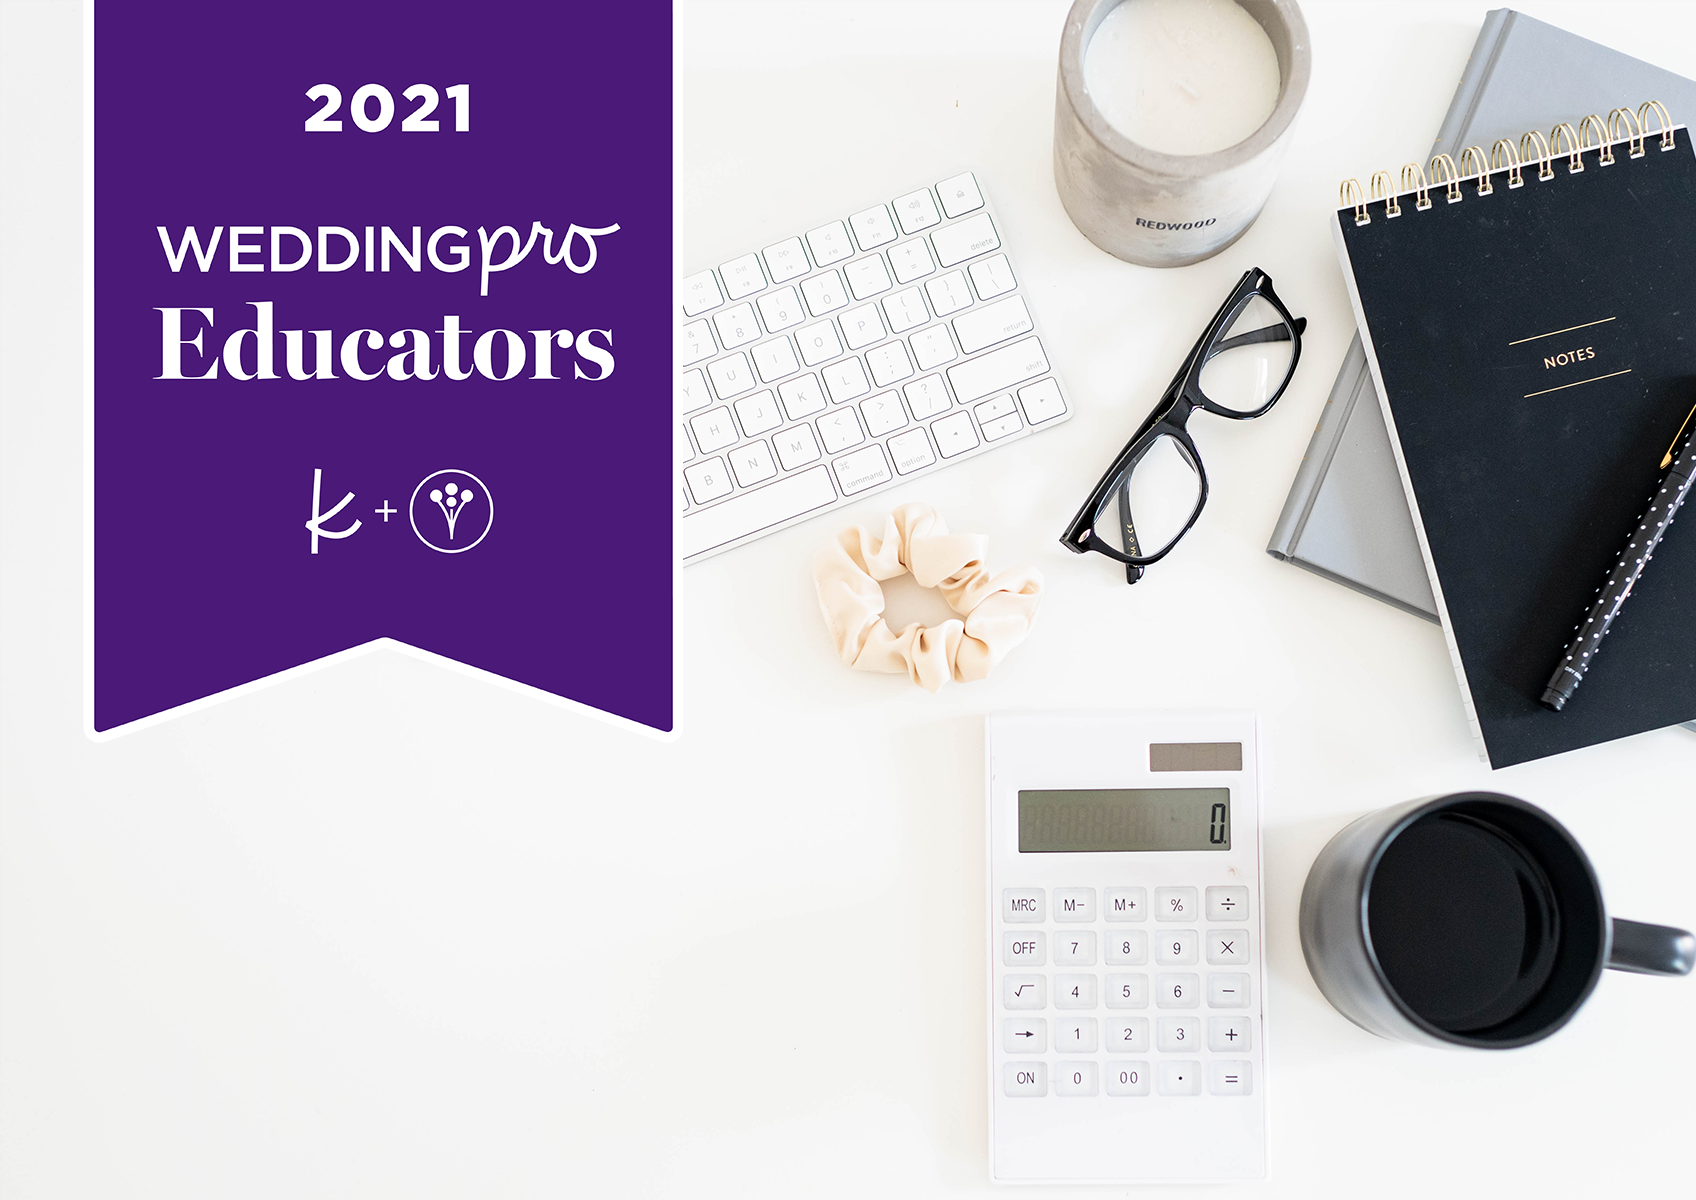 Meet the 2021 WeddingPro Educators